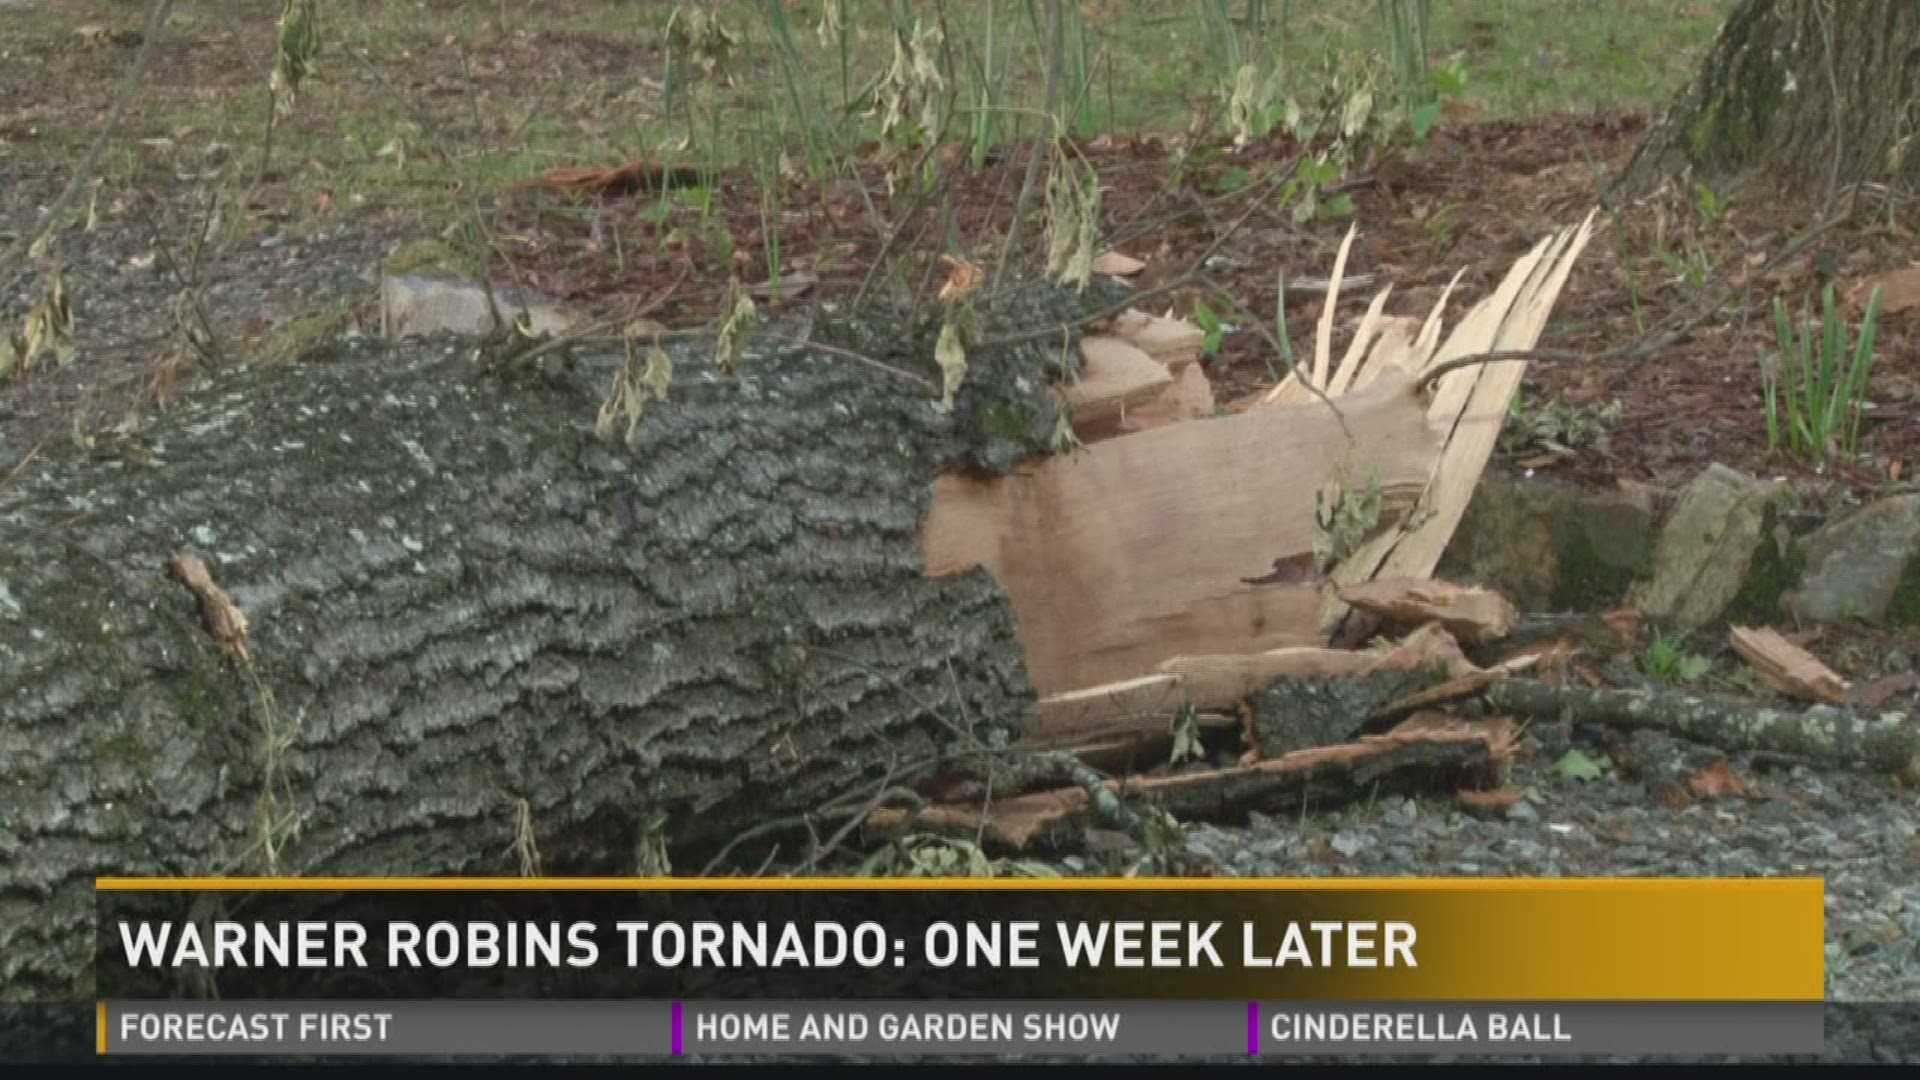 Warner Robins tornado: One week later